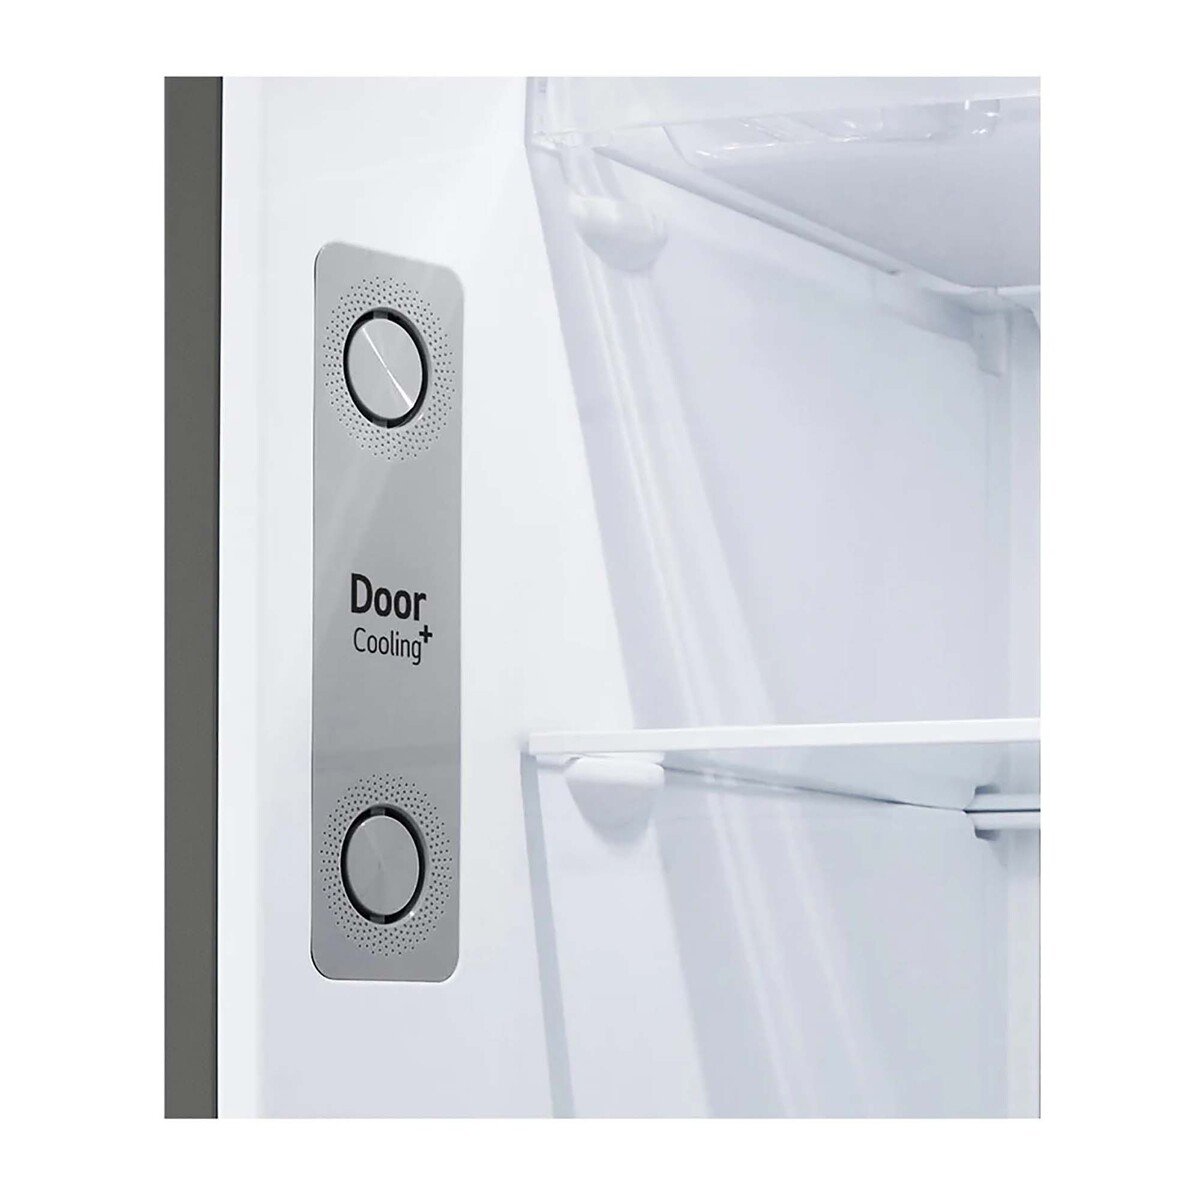 LG Double Door Refrigerator GN-B432PQGB 315LTR